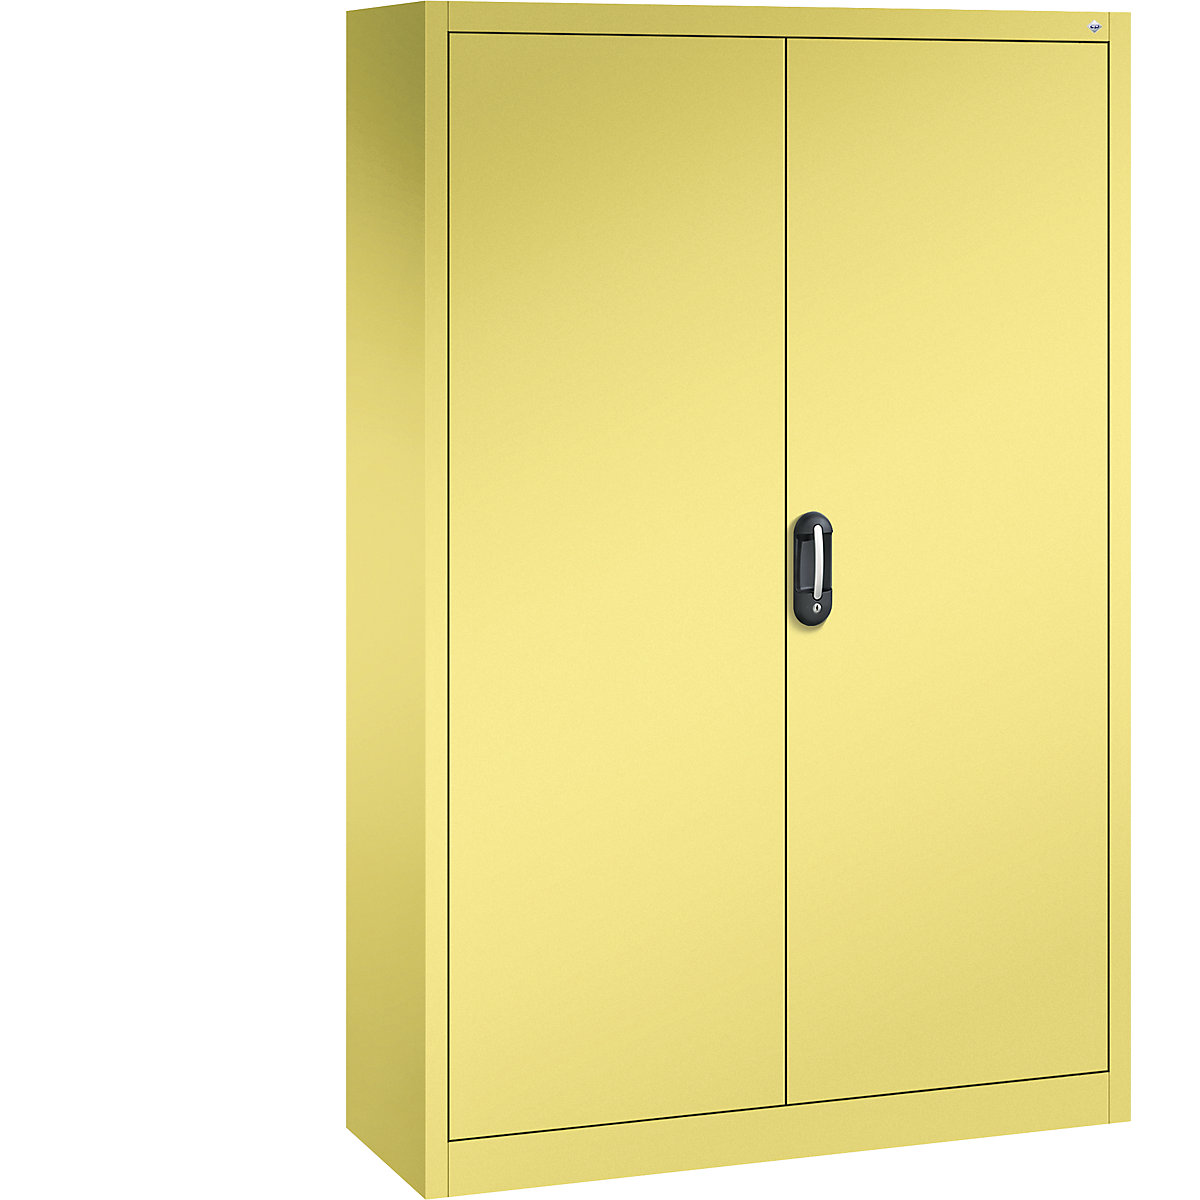 ACURADO universal cupboard – C+P, WxD 1200 x 400 mm, sulphur yellow / sulphur yellow-25